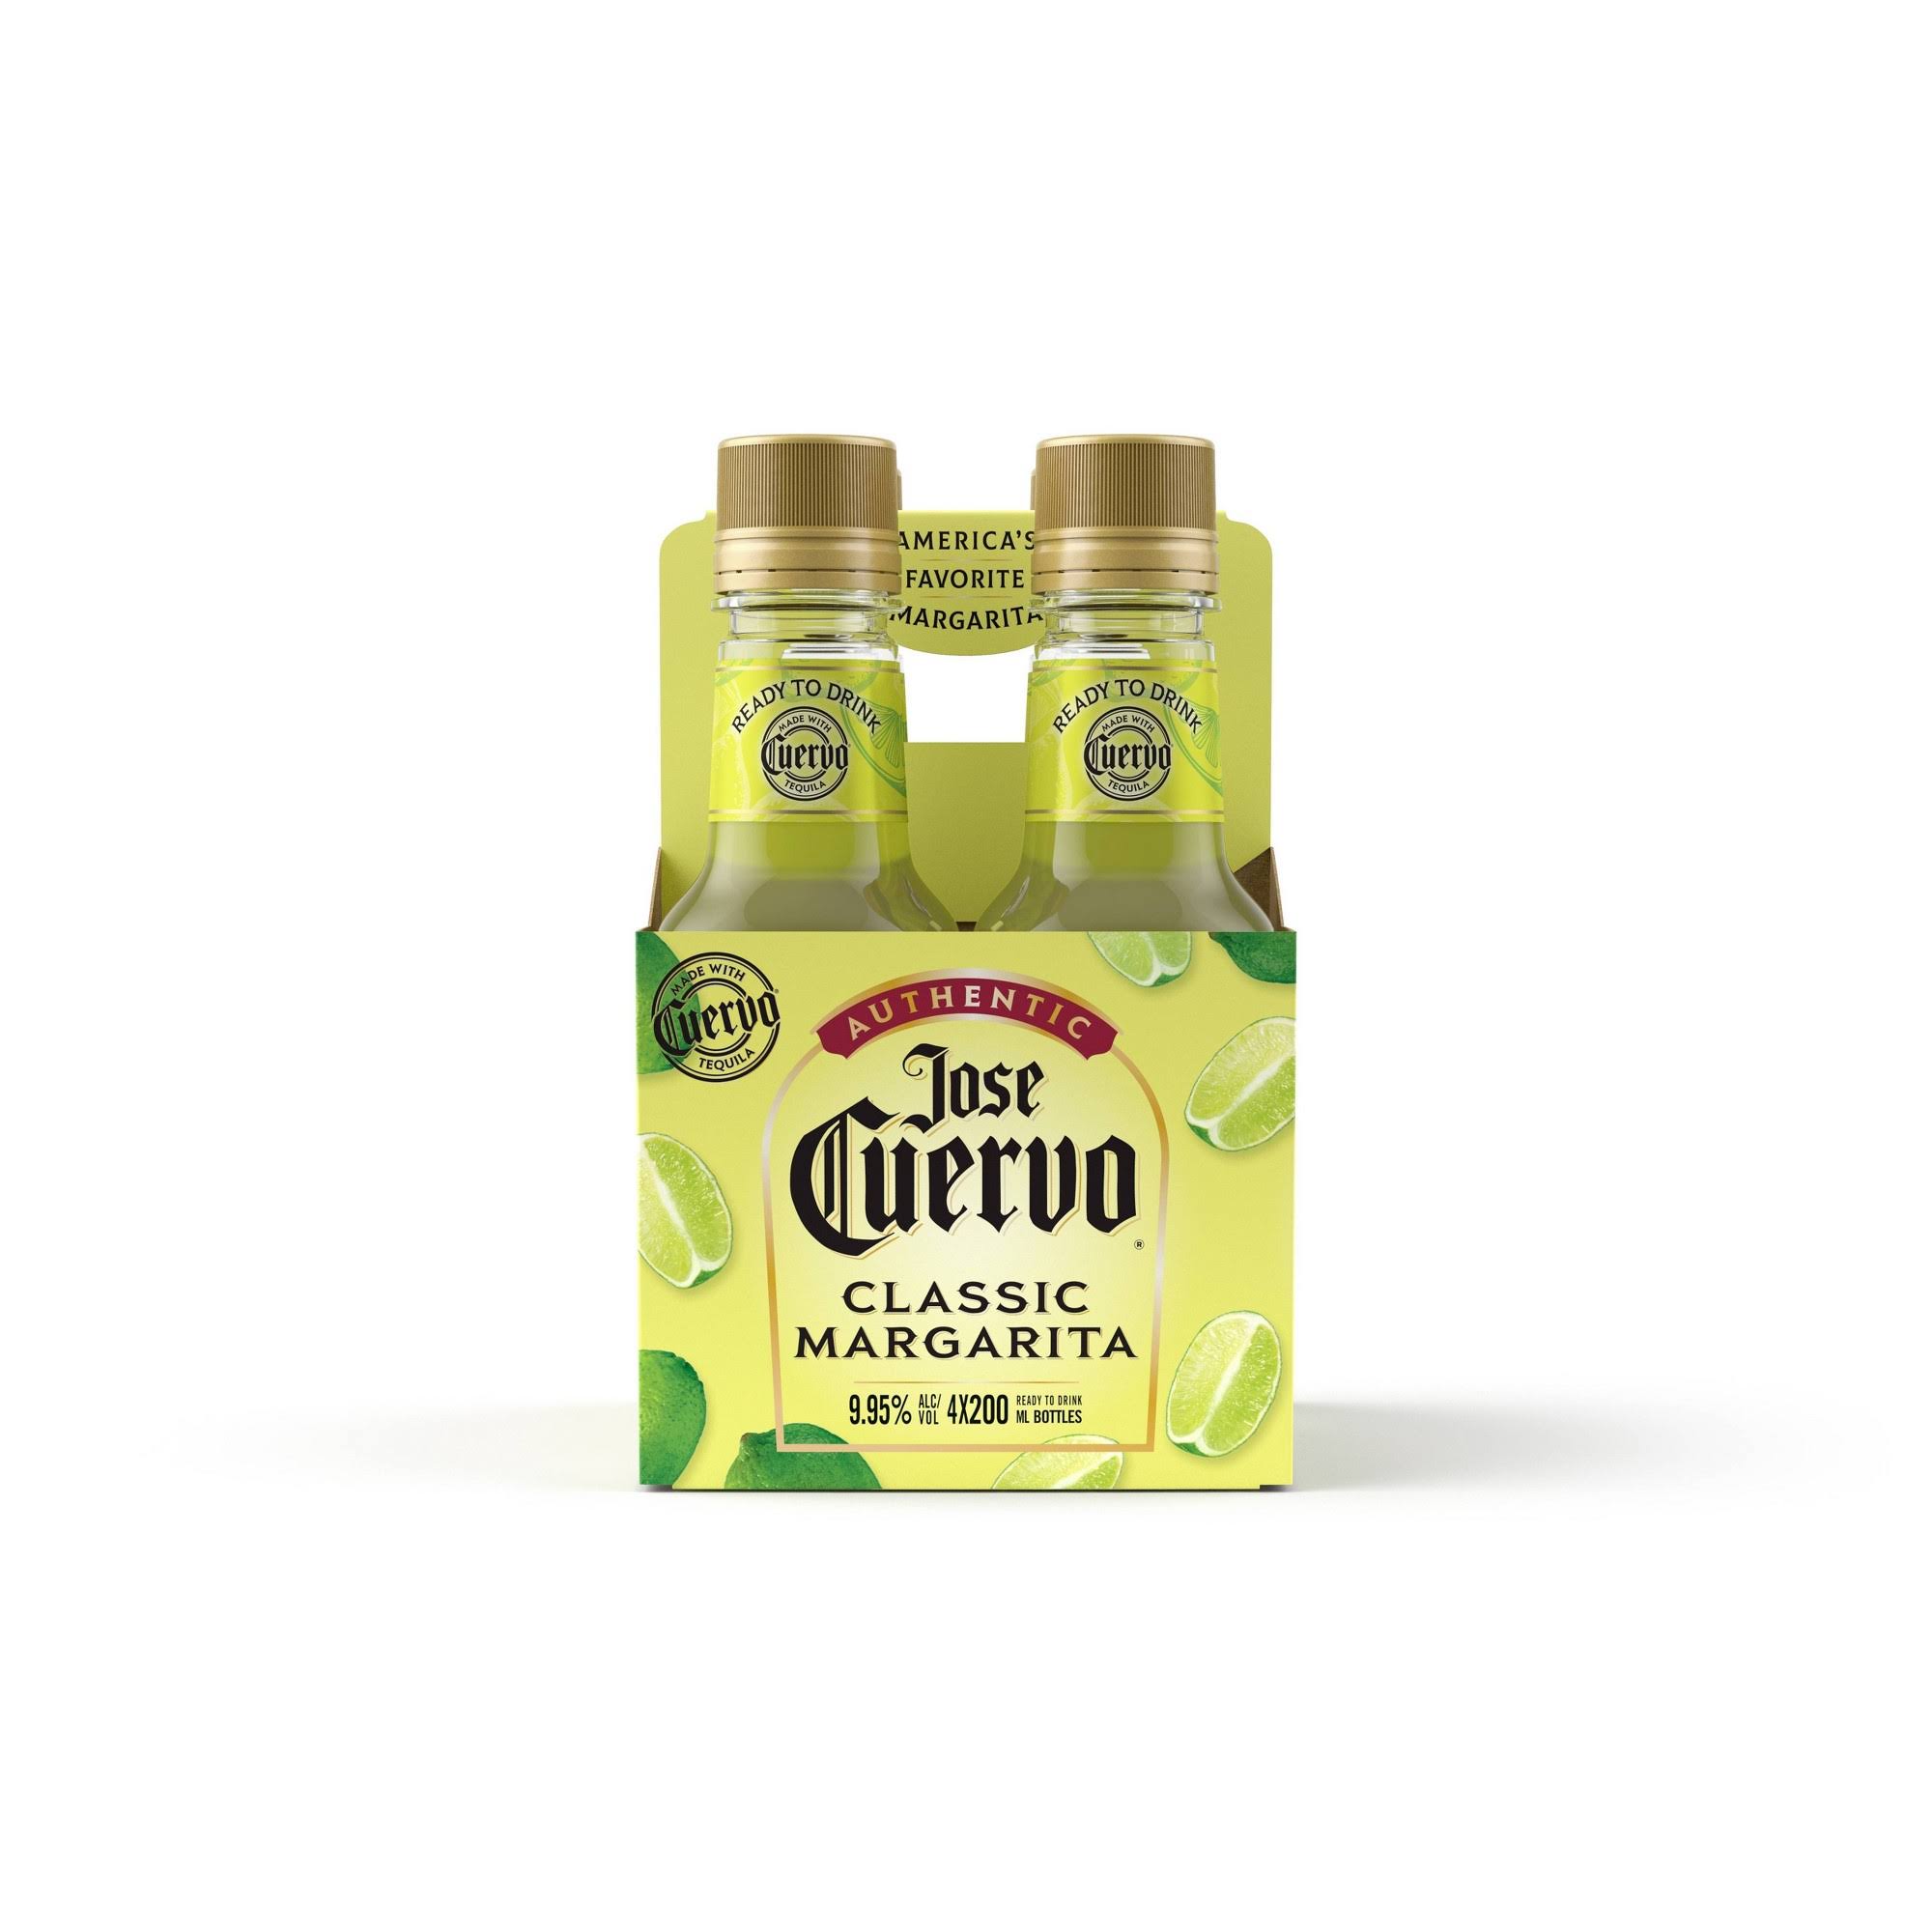 Jose Cuervo Margarita, Classic, Minis - 4 pack, 200 ml bottles